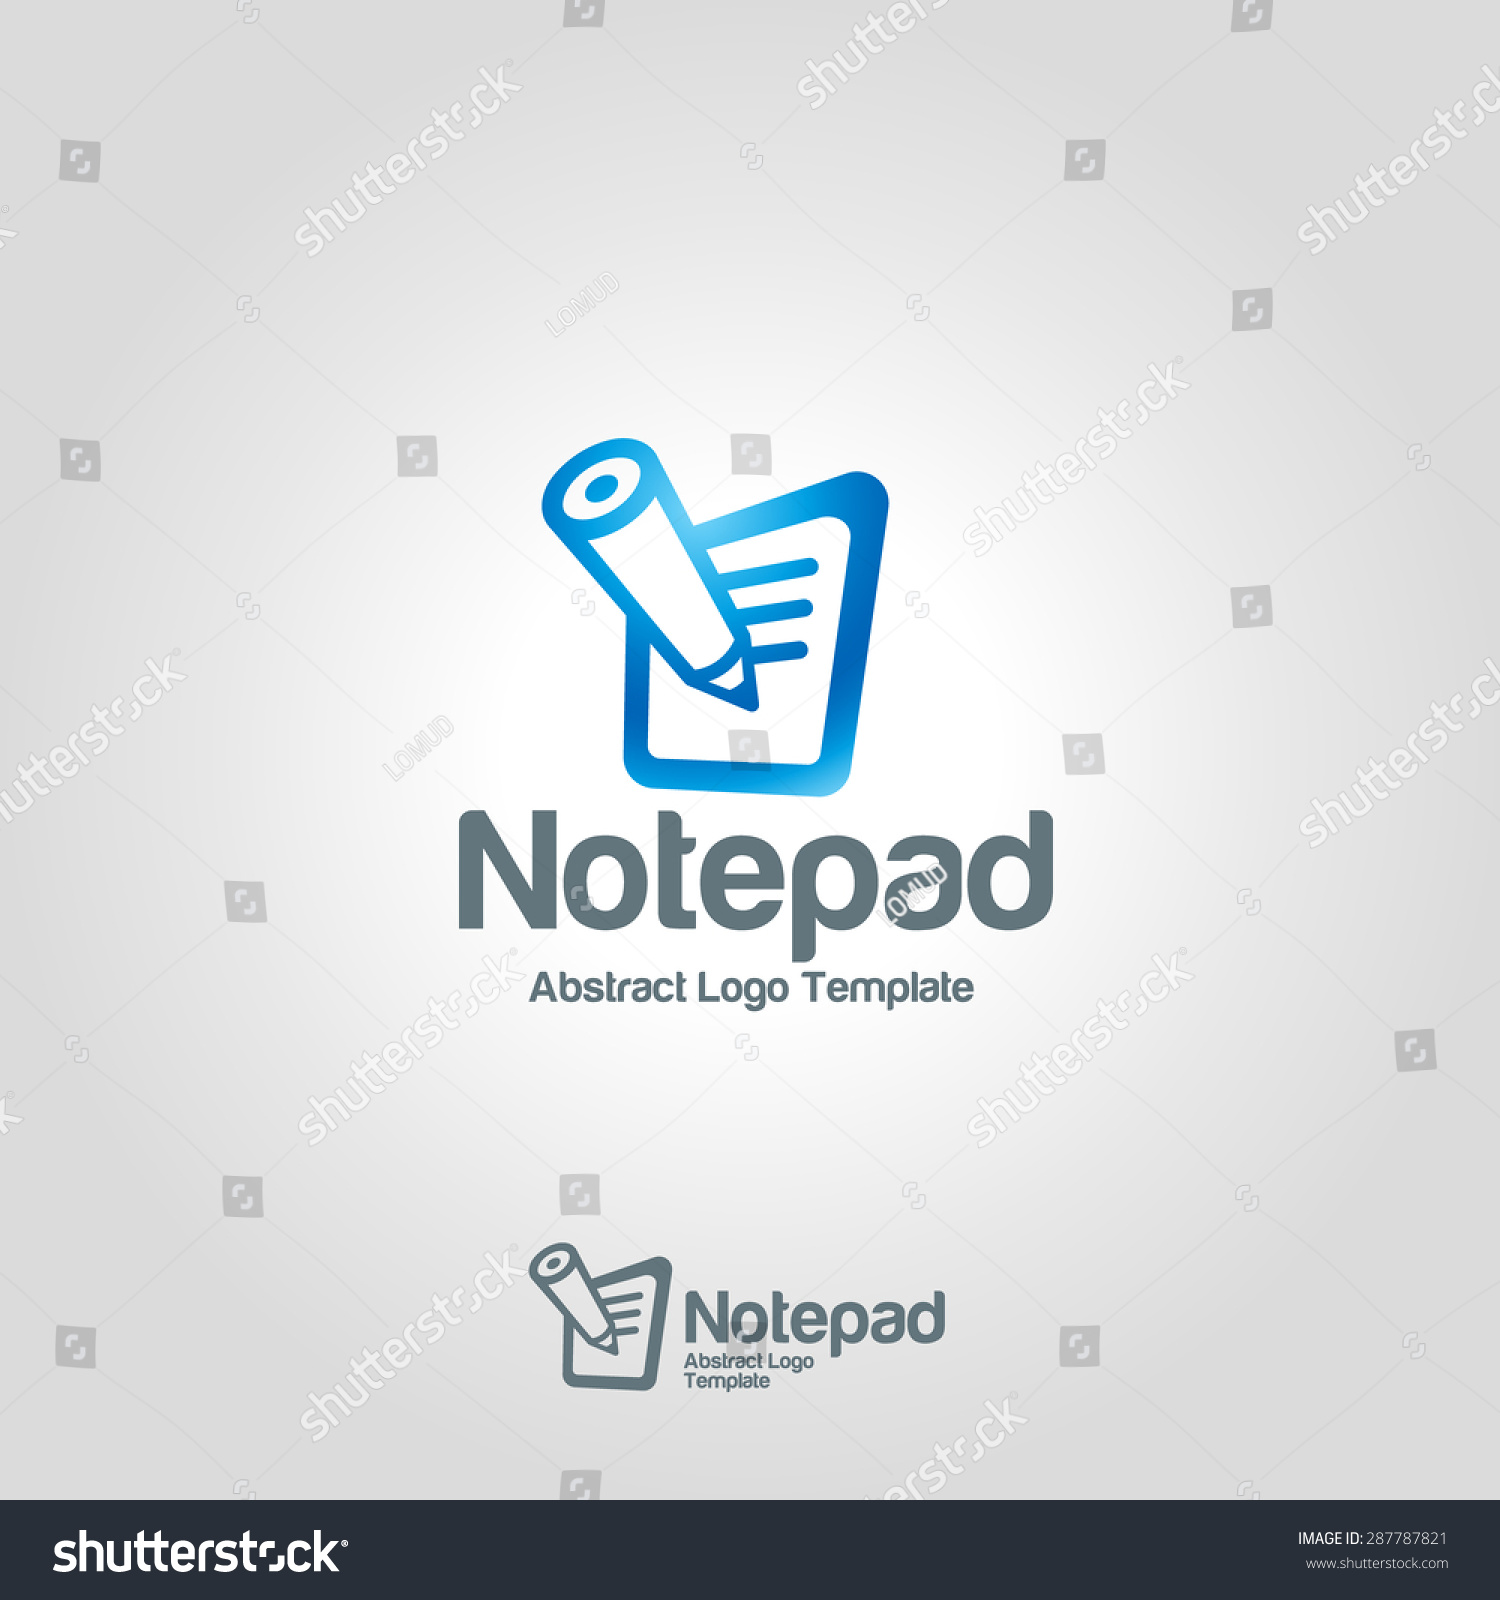 Notepad Logo Template. Corporate Branding Identity Stock Vector ...